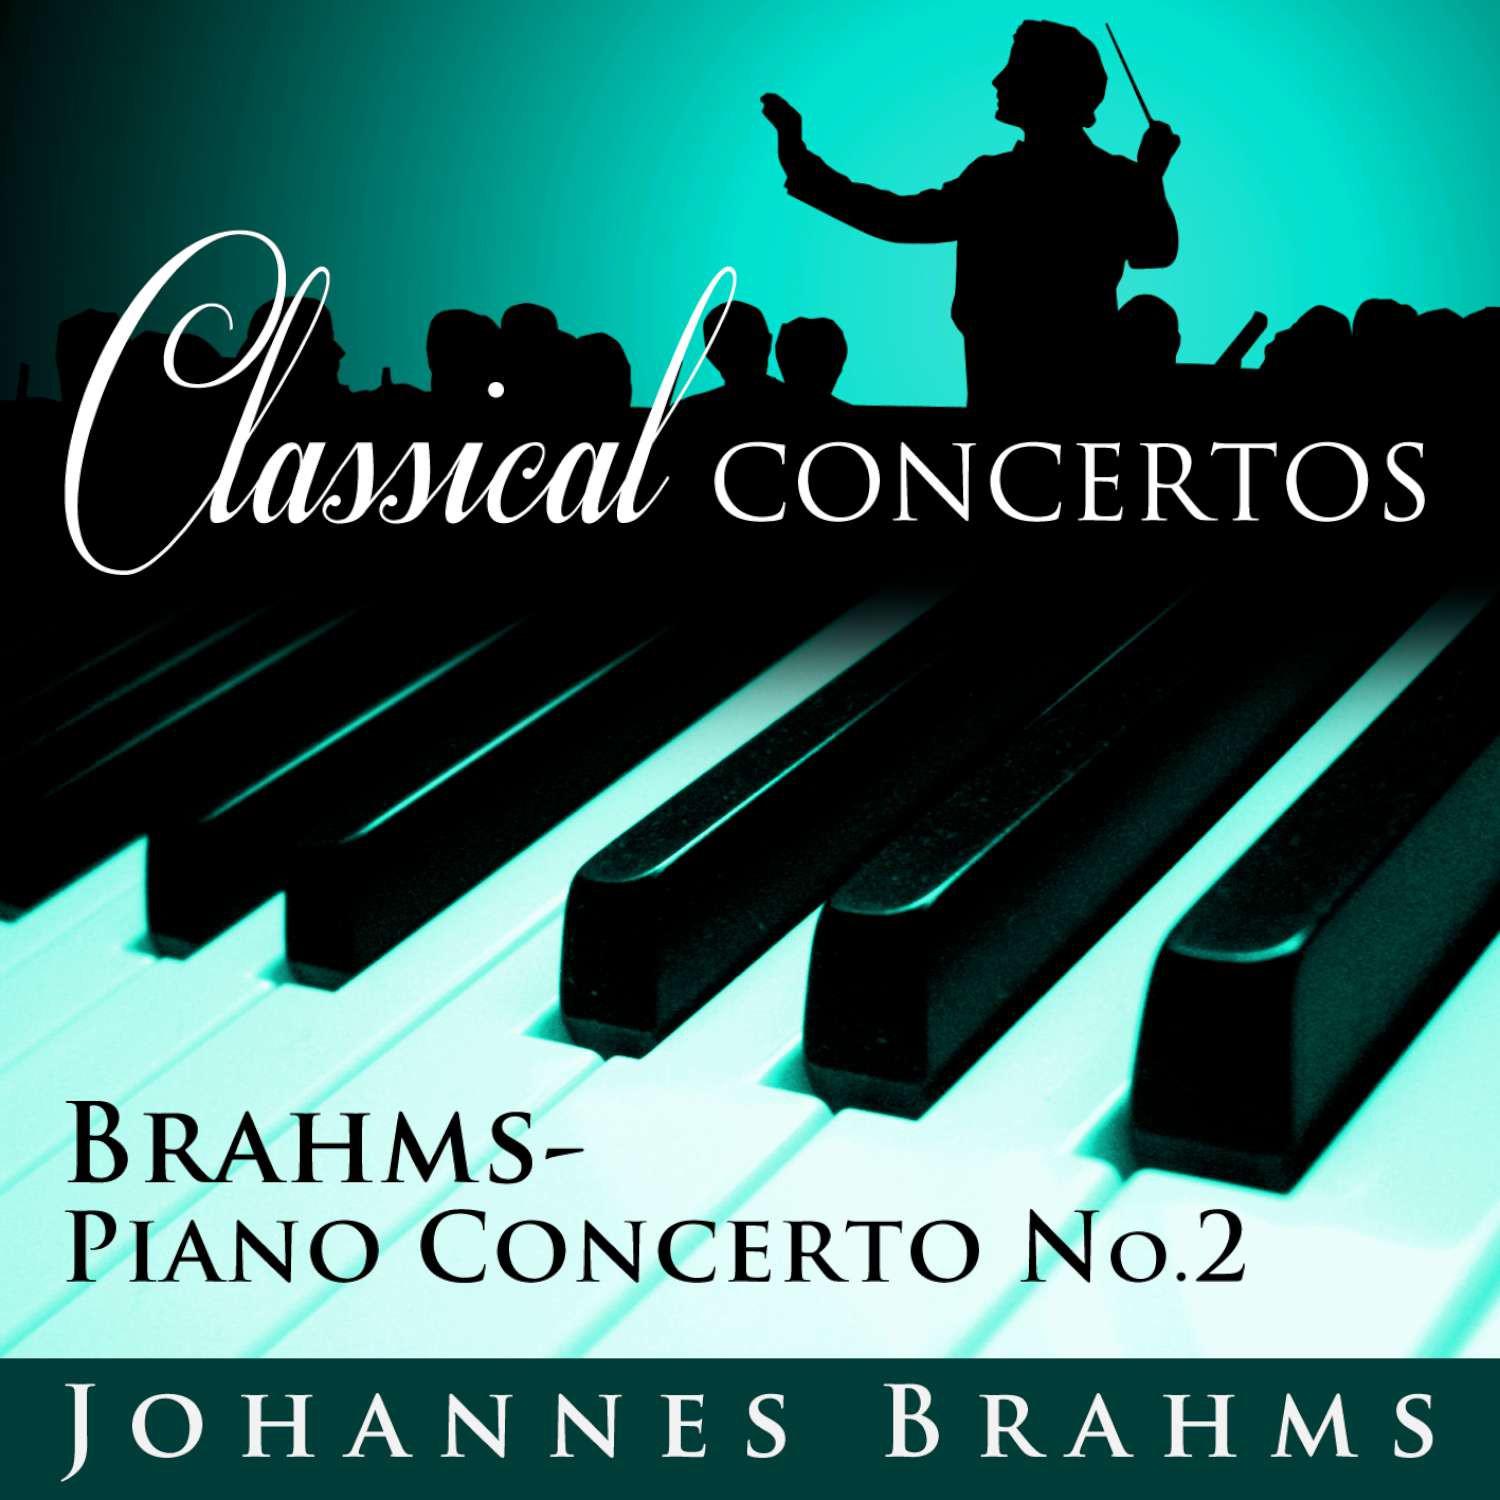 Classical Concertos - Brahms: Piano Concerto #2